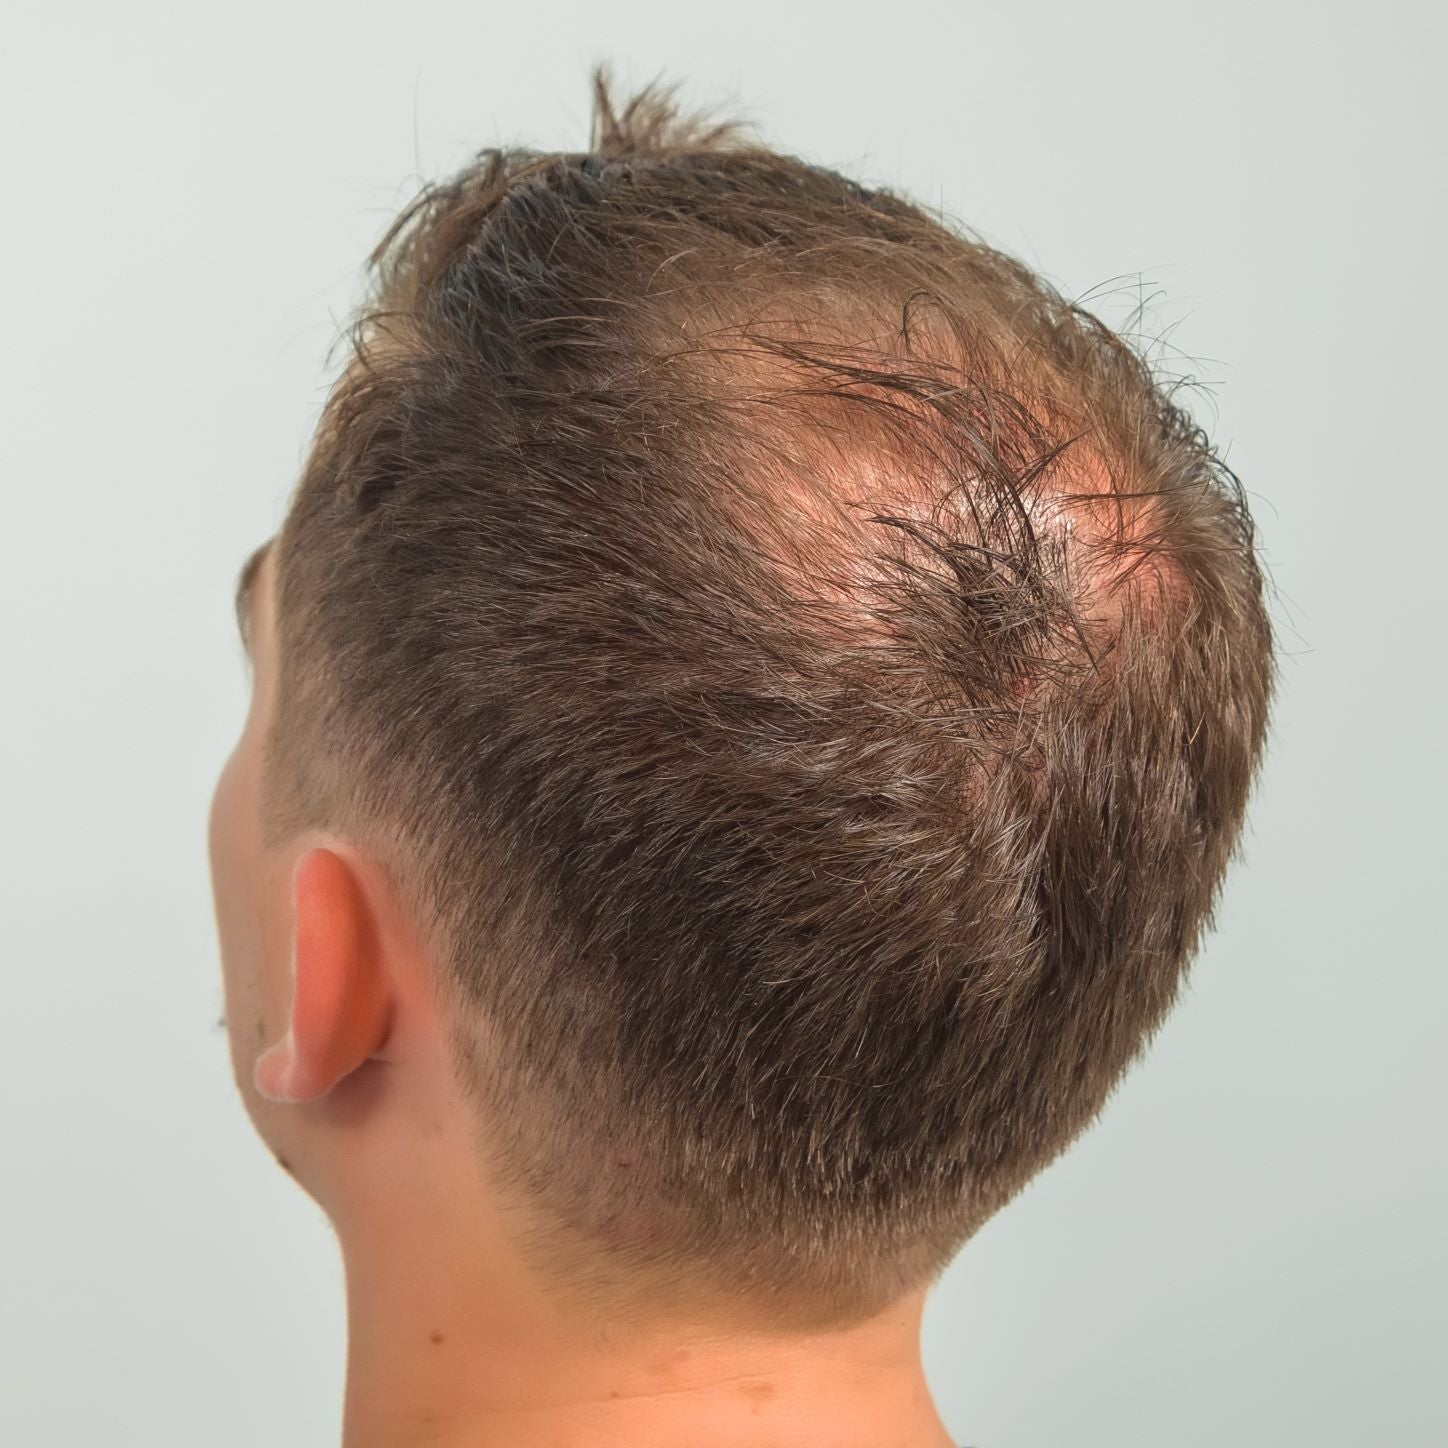 Quick Test May Help Spot Male Hair Loss - CBS News